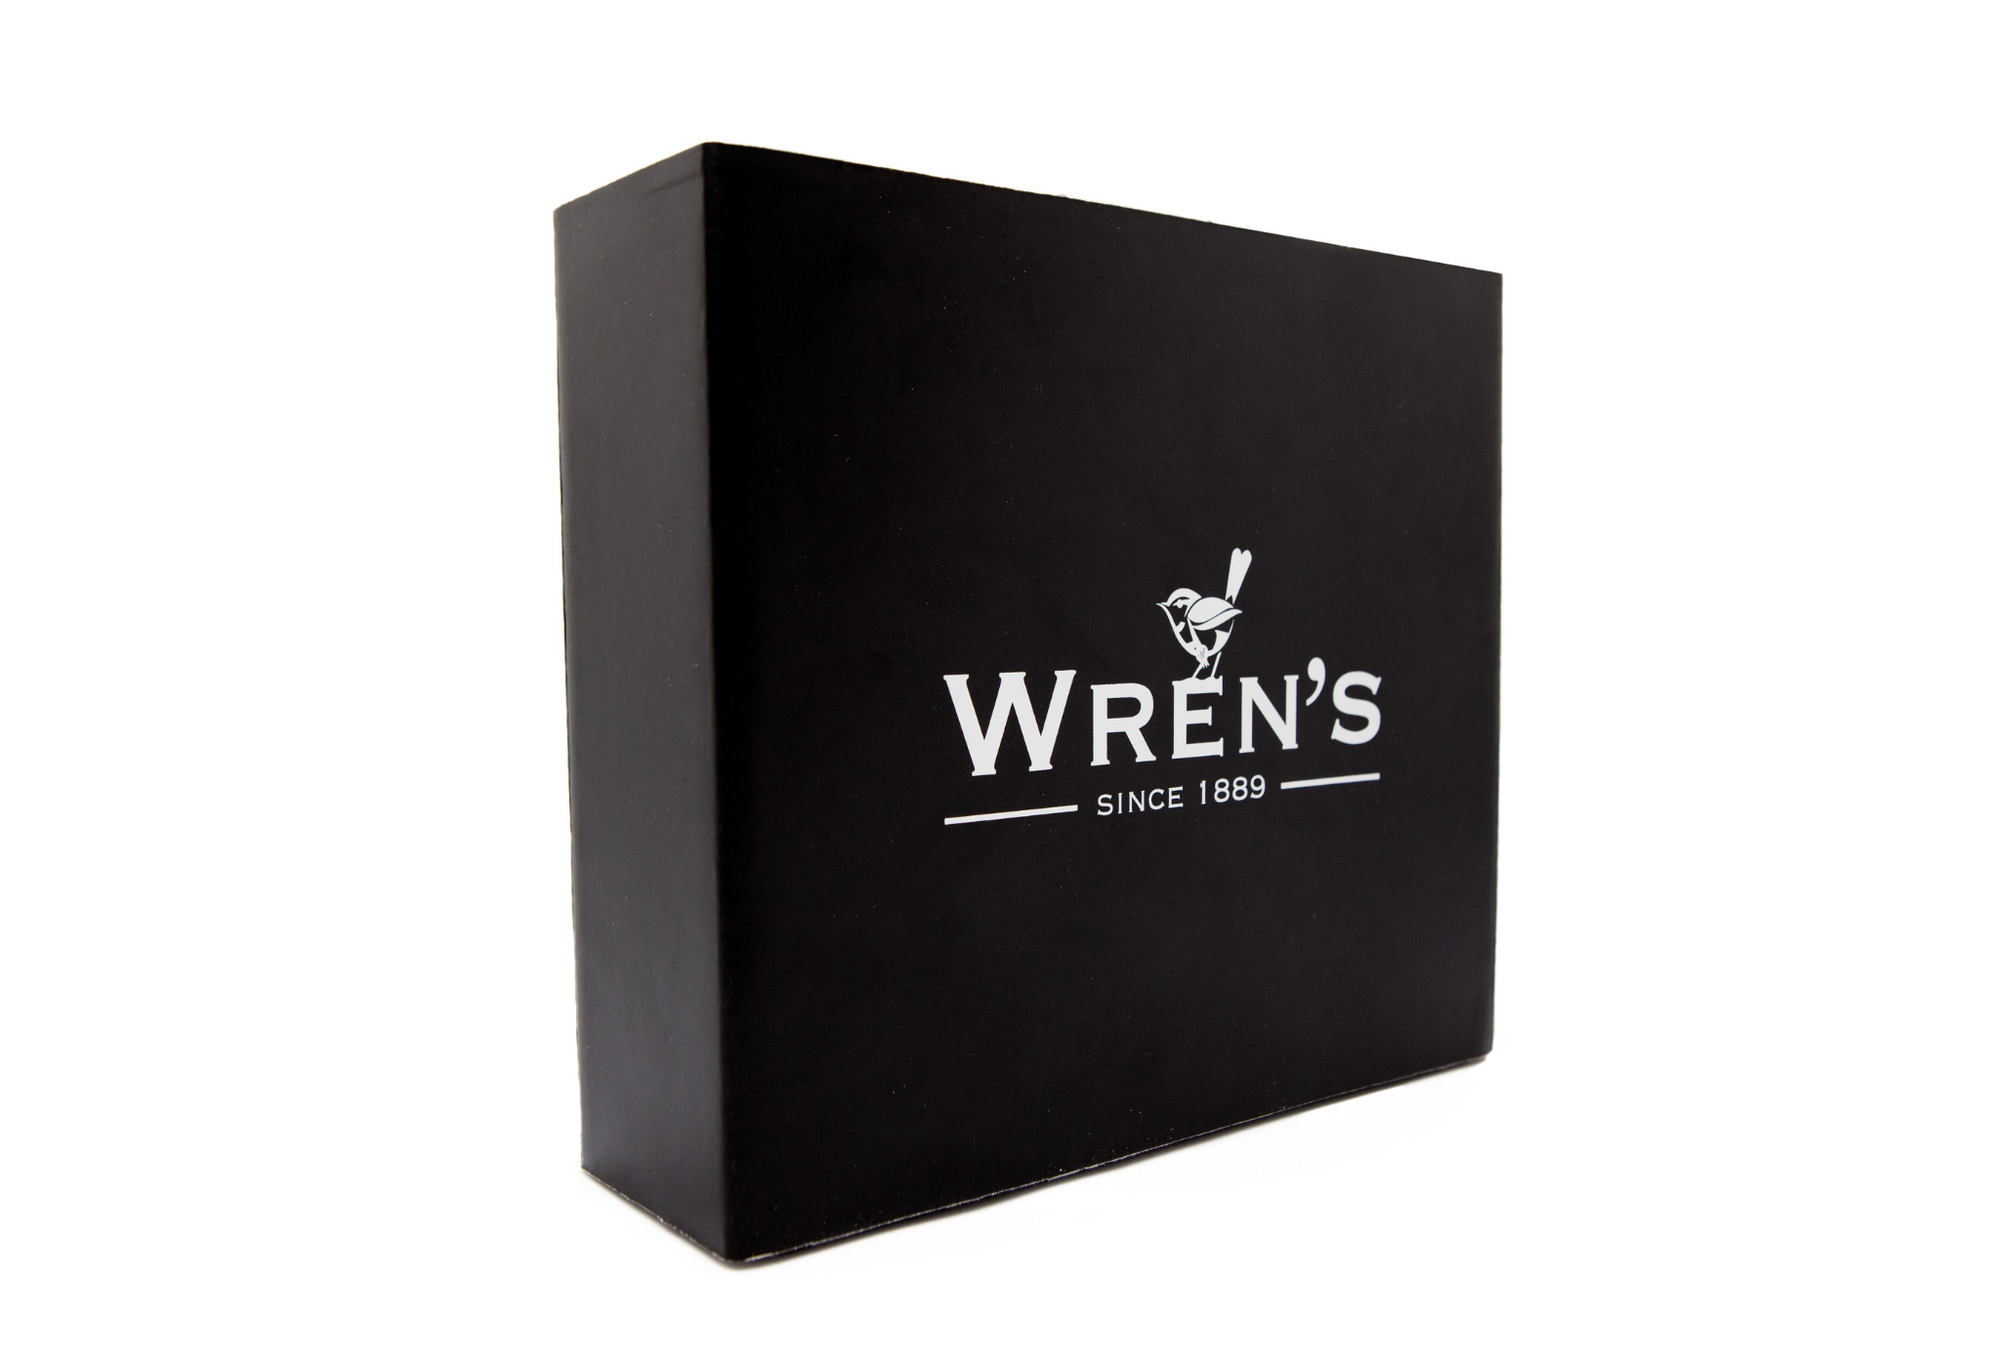 Wren's Leather Care Kit